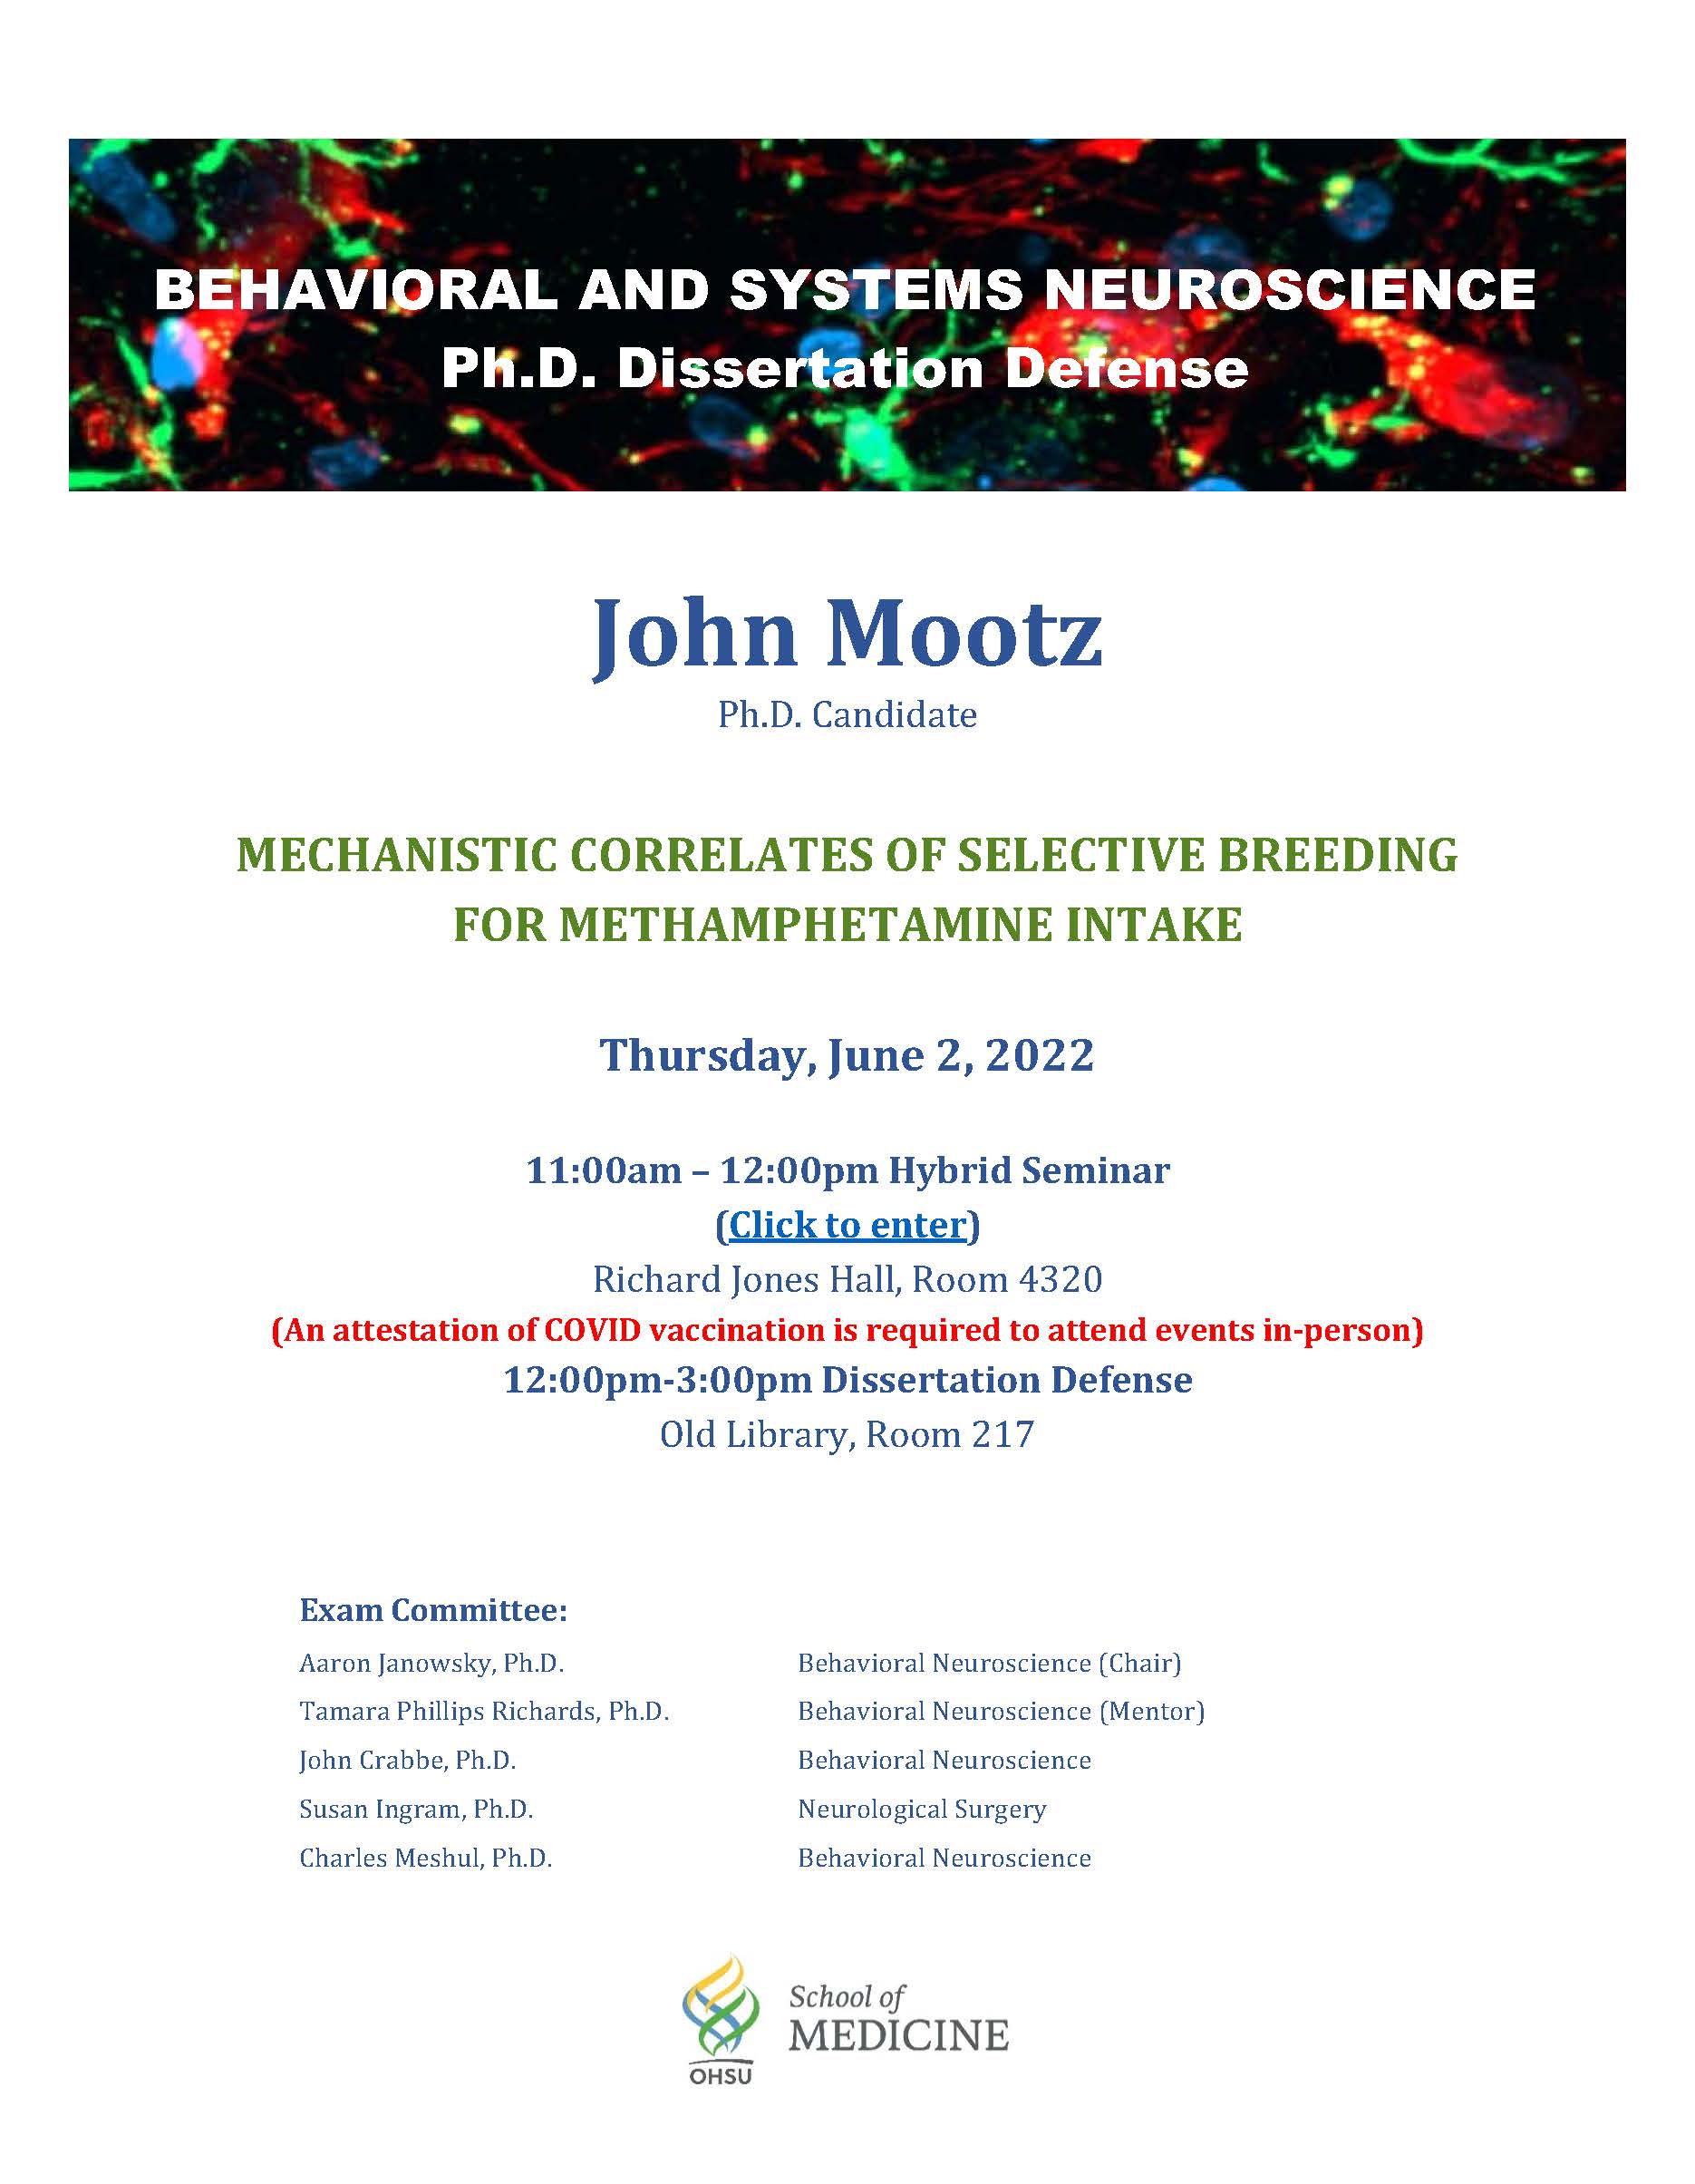 John Mootz Ph.D. Dissertation Defense Flyer